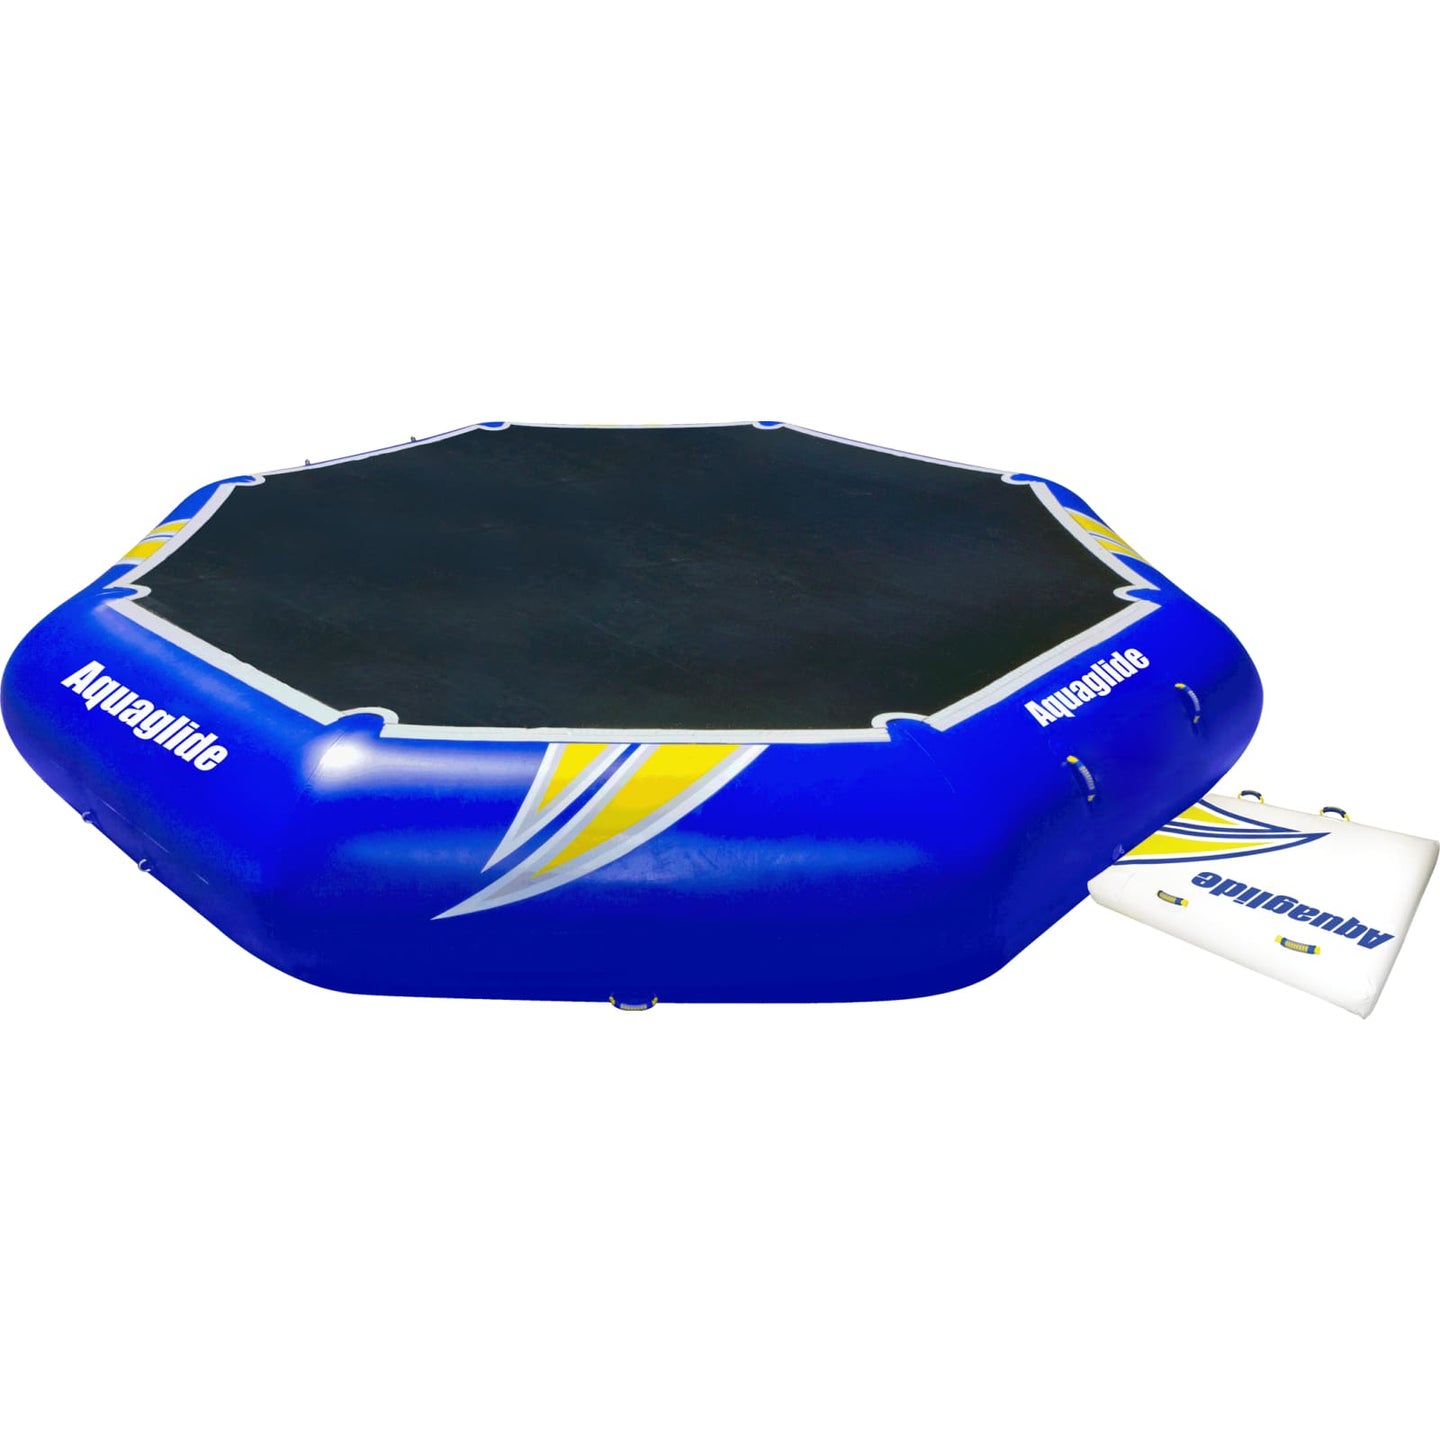 Aquaglide Rebound 20 Water Bouncer - 585219623 - Water Bouncers